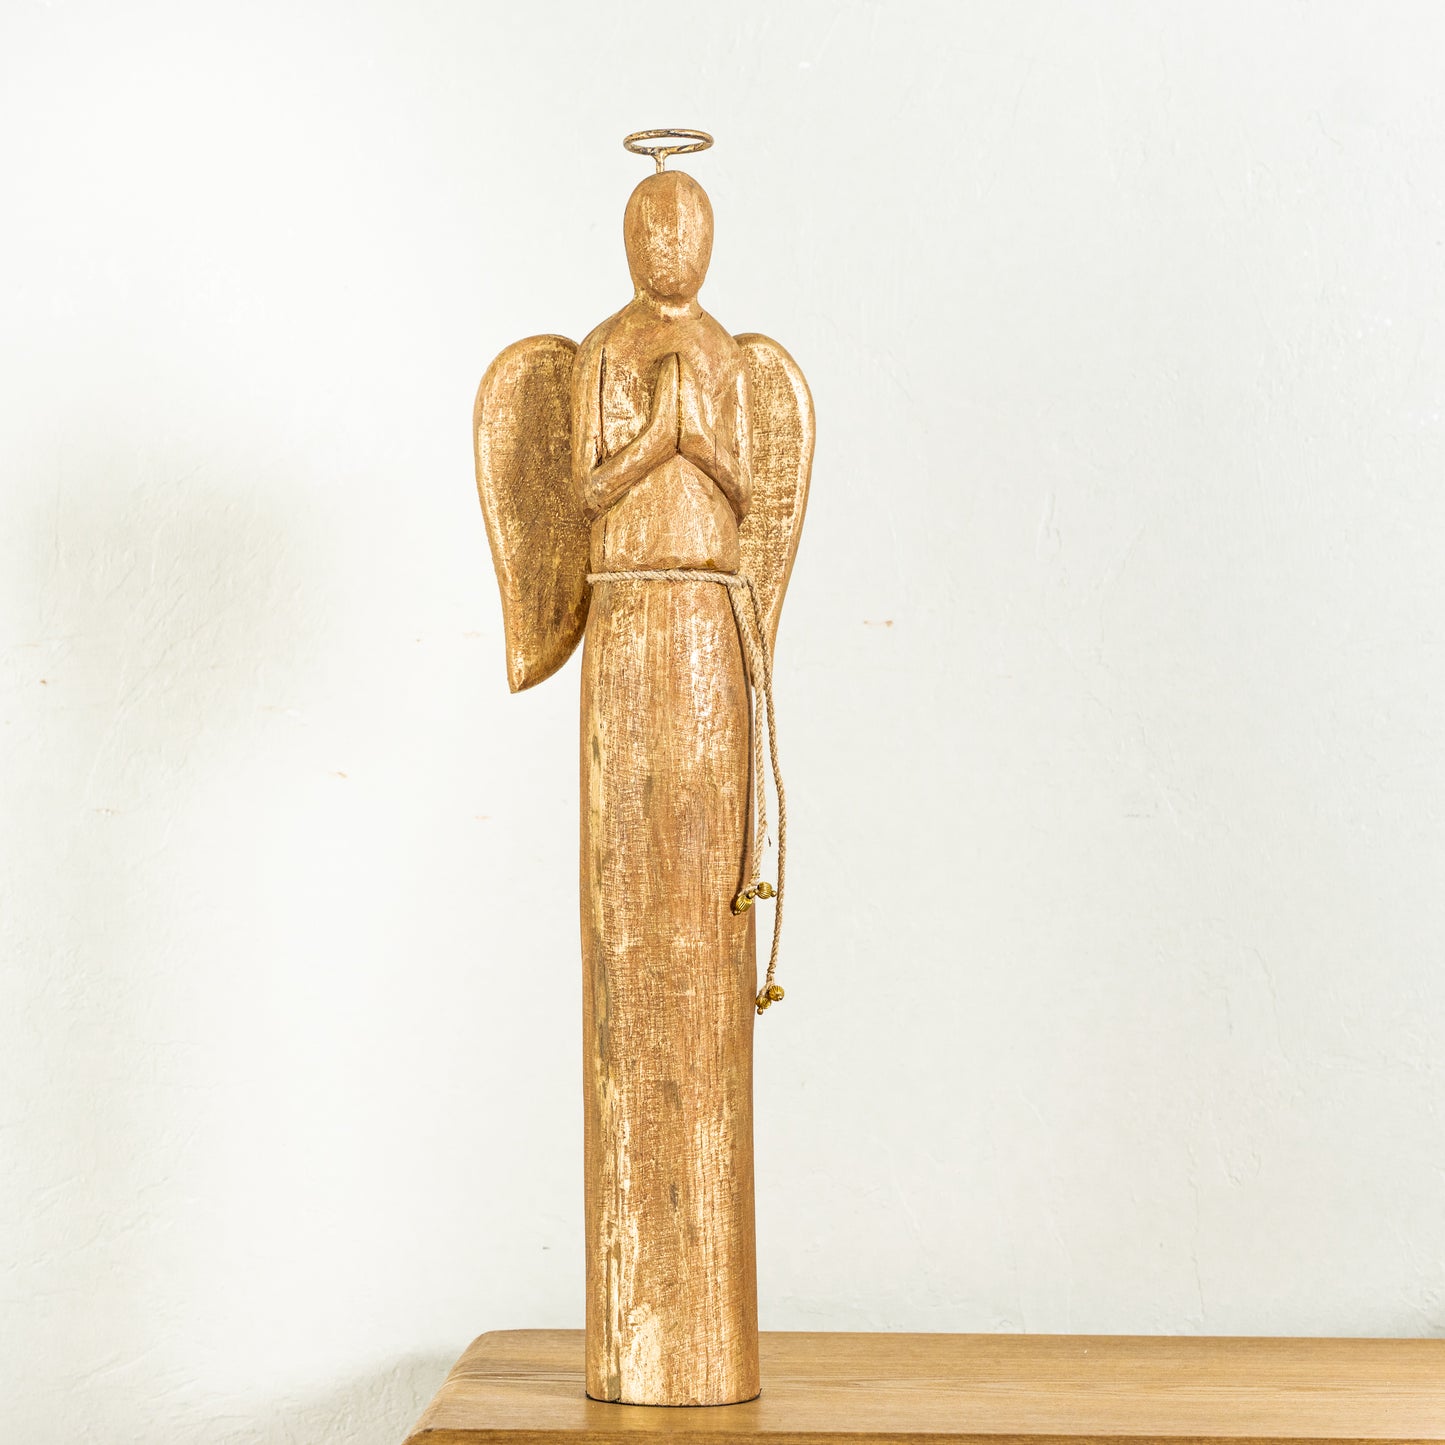 Mango Wood Carved Angels, 2 Styles